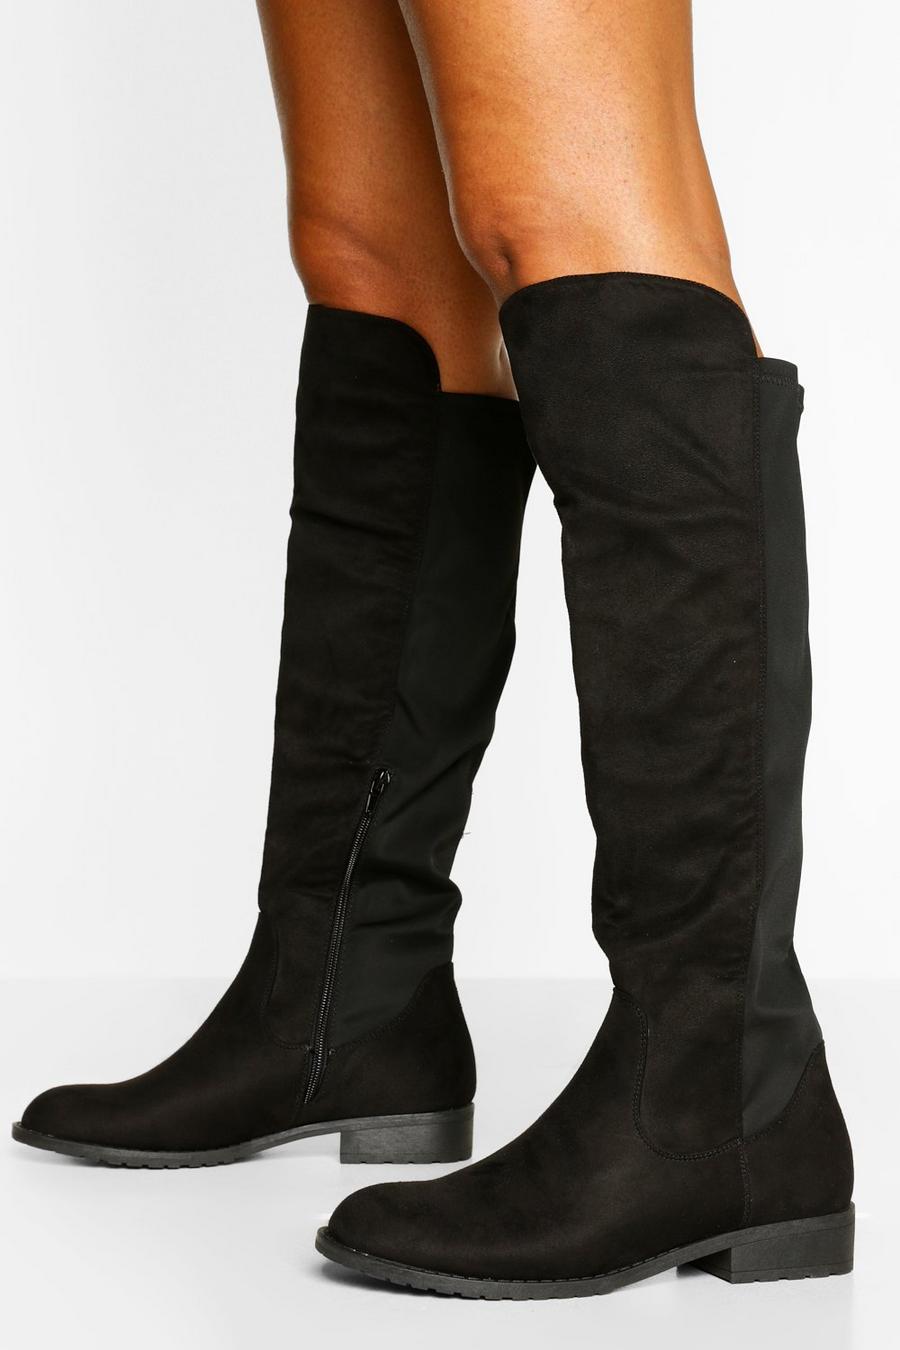 Black Wider Calf Knee High Riding Boots